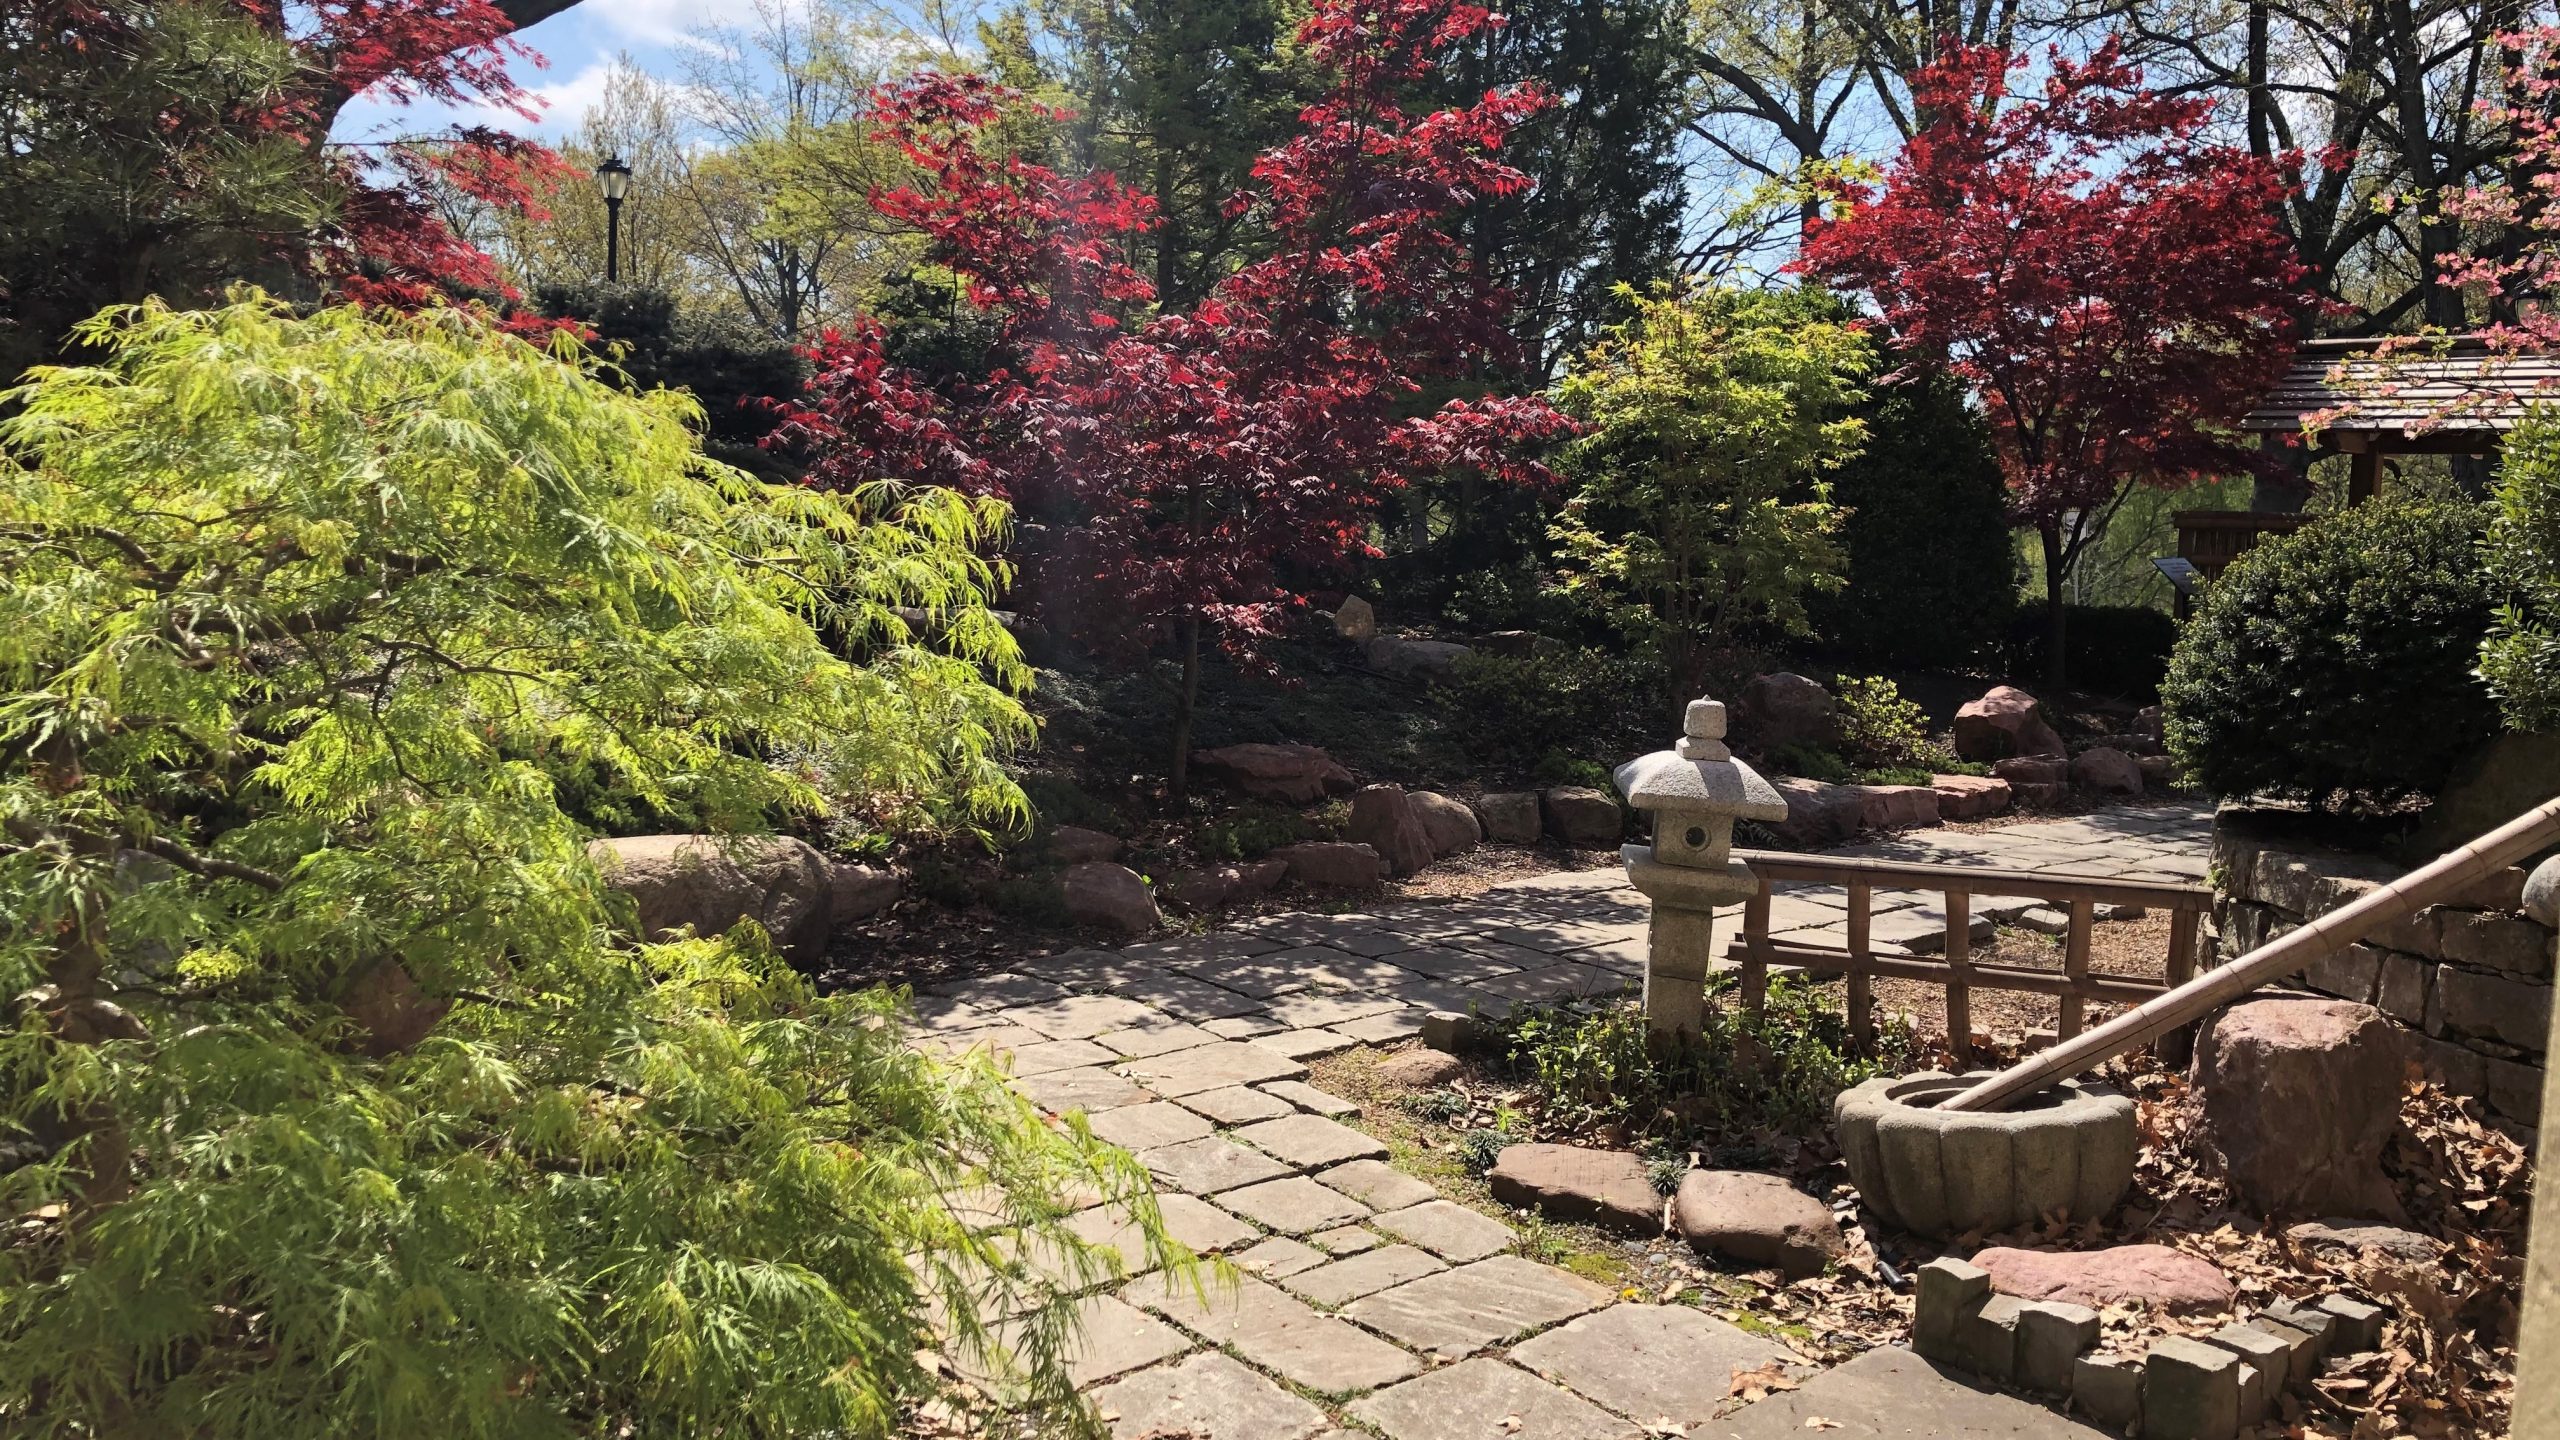 Japanese Tea Room and Garden